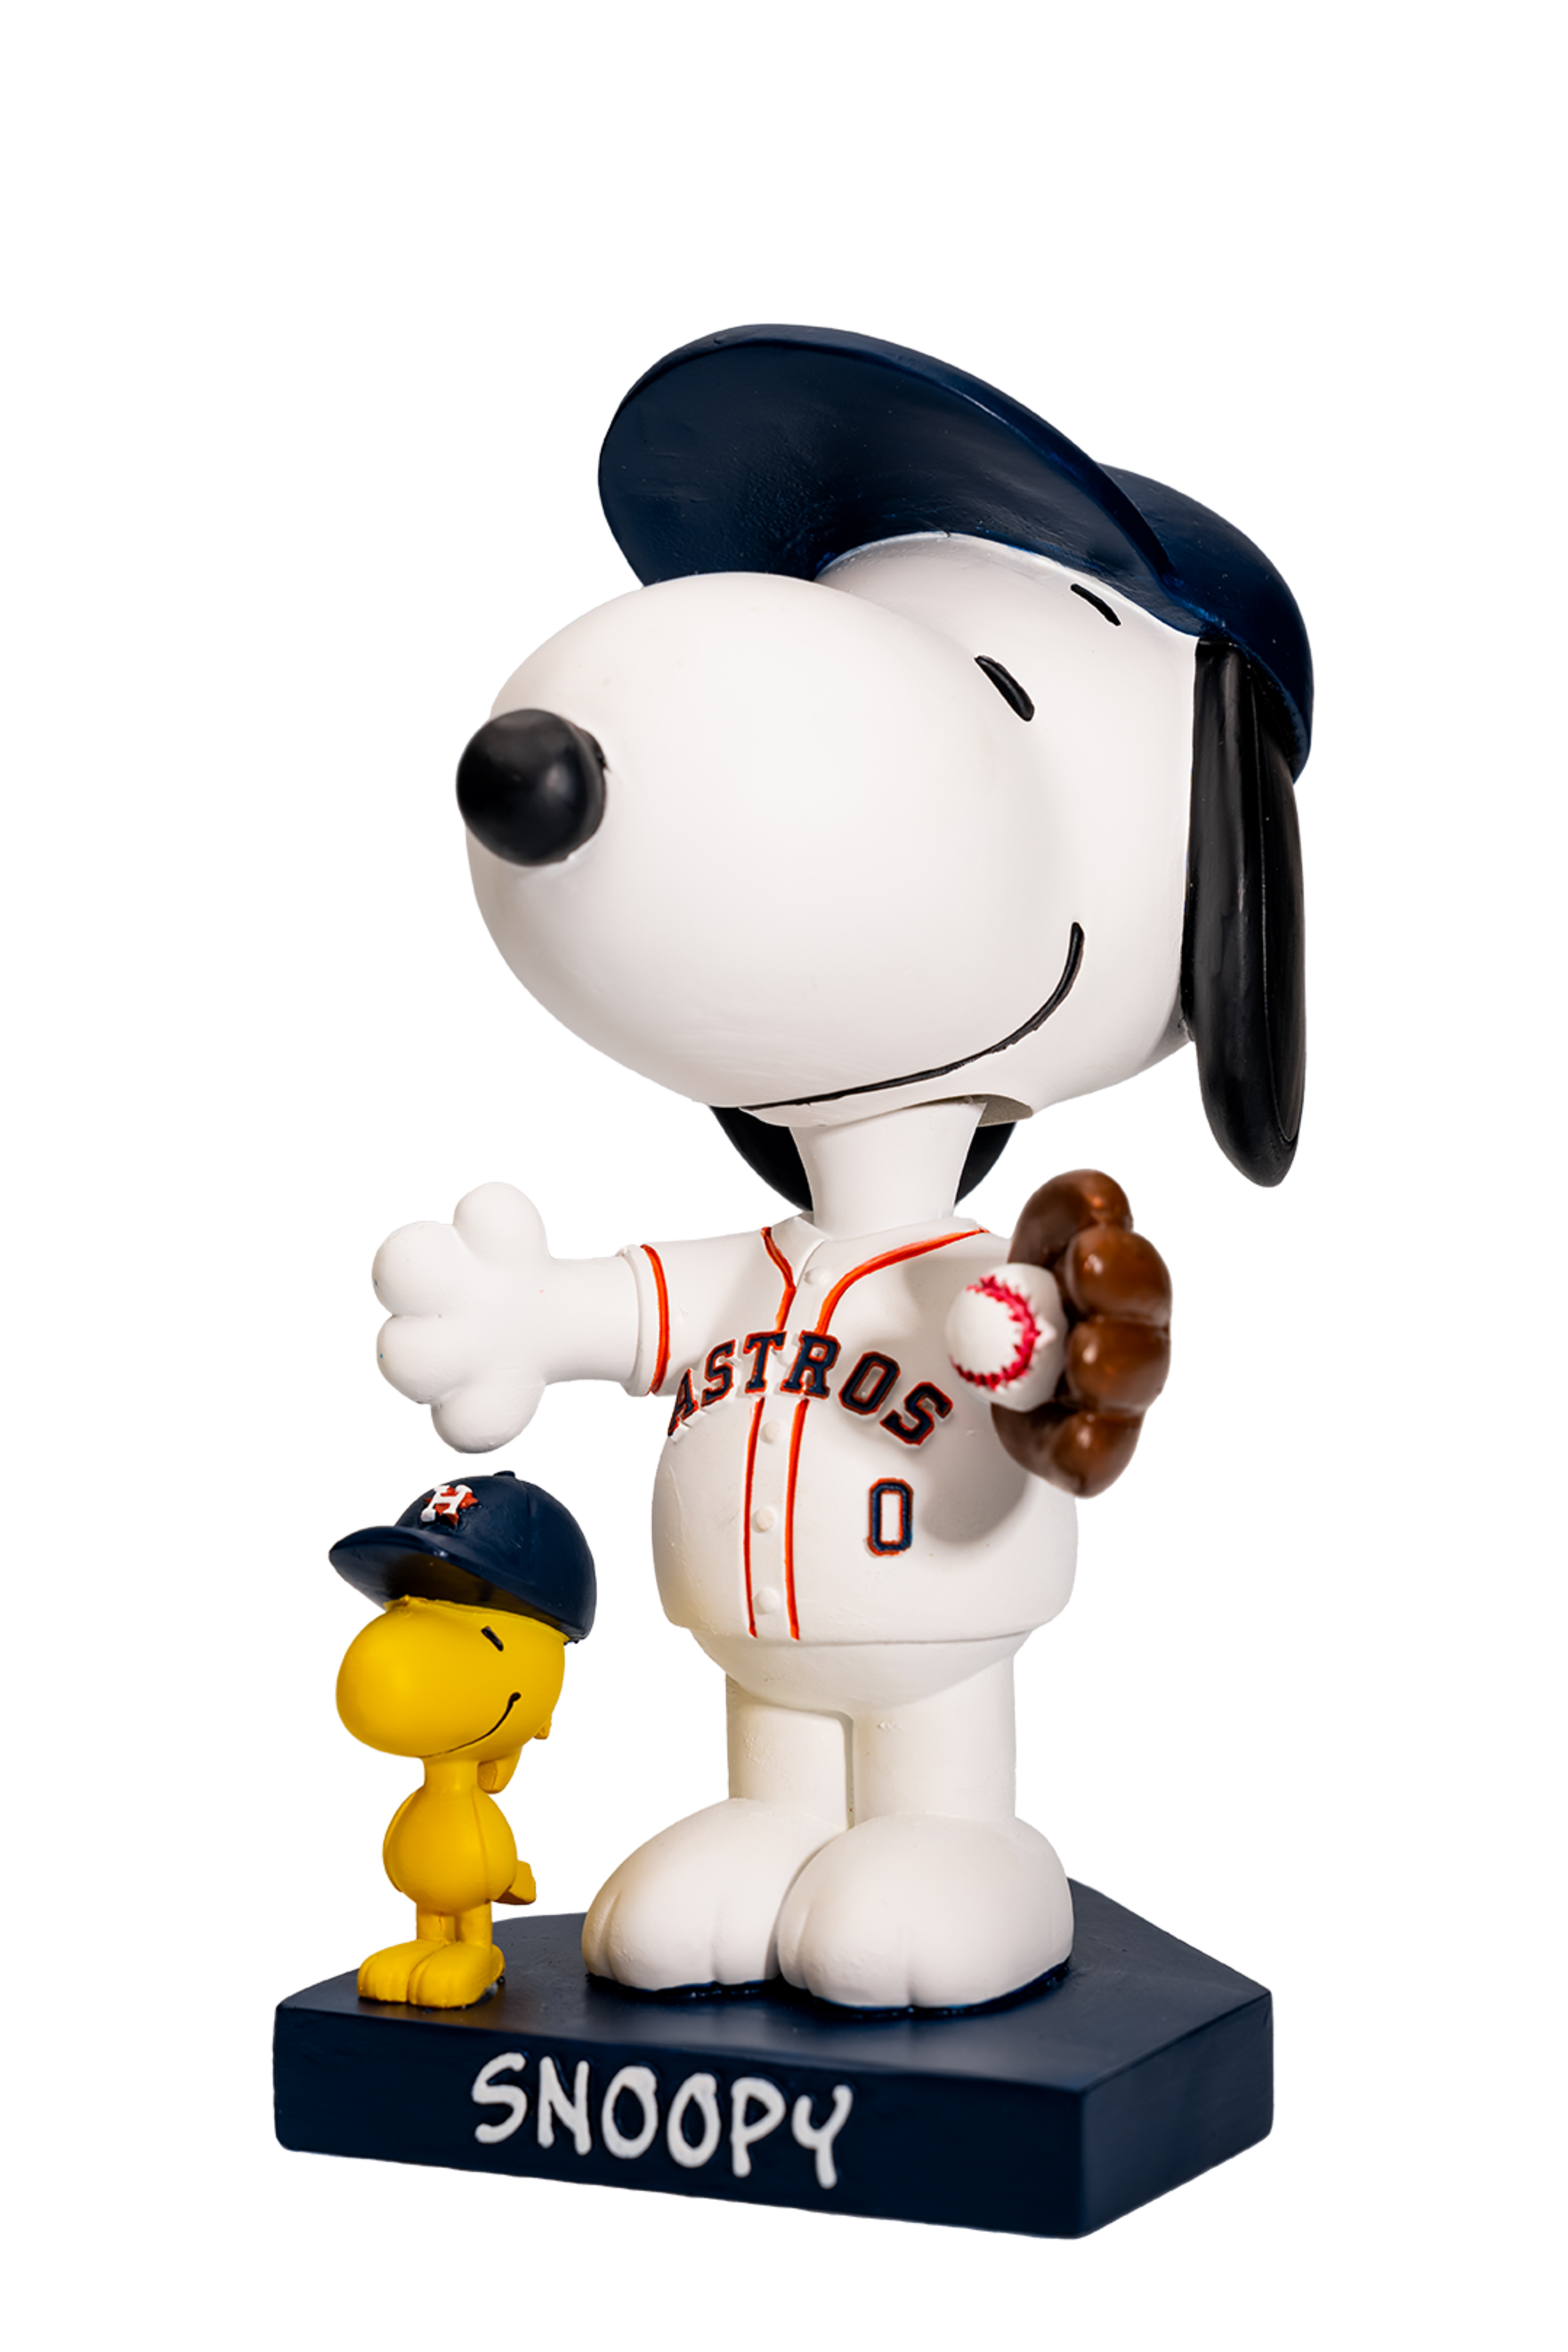 MLB Houston Astros Snoopy Baseball Jersey